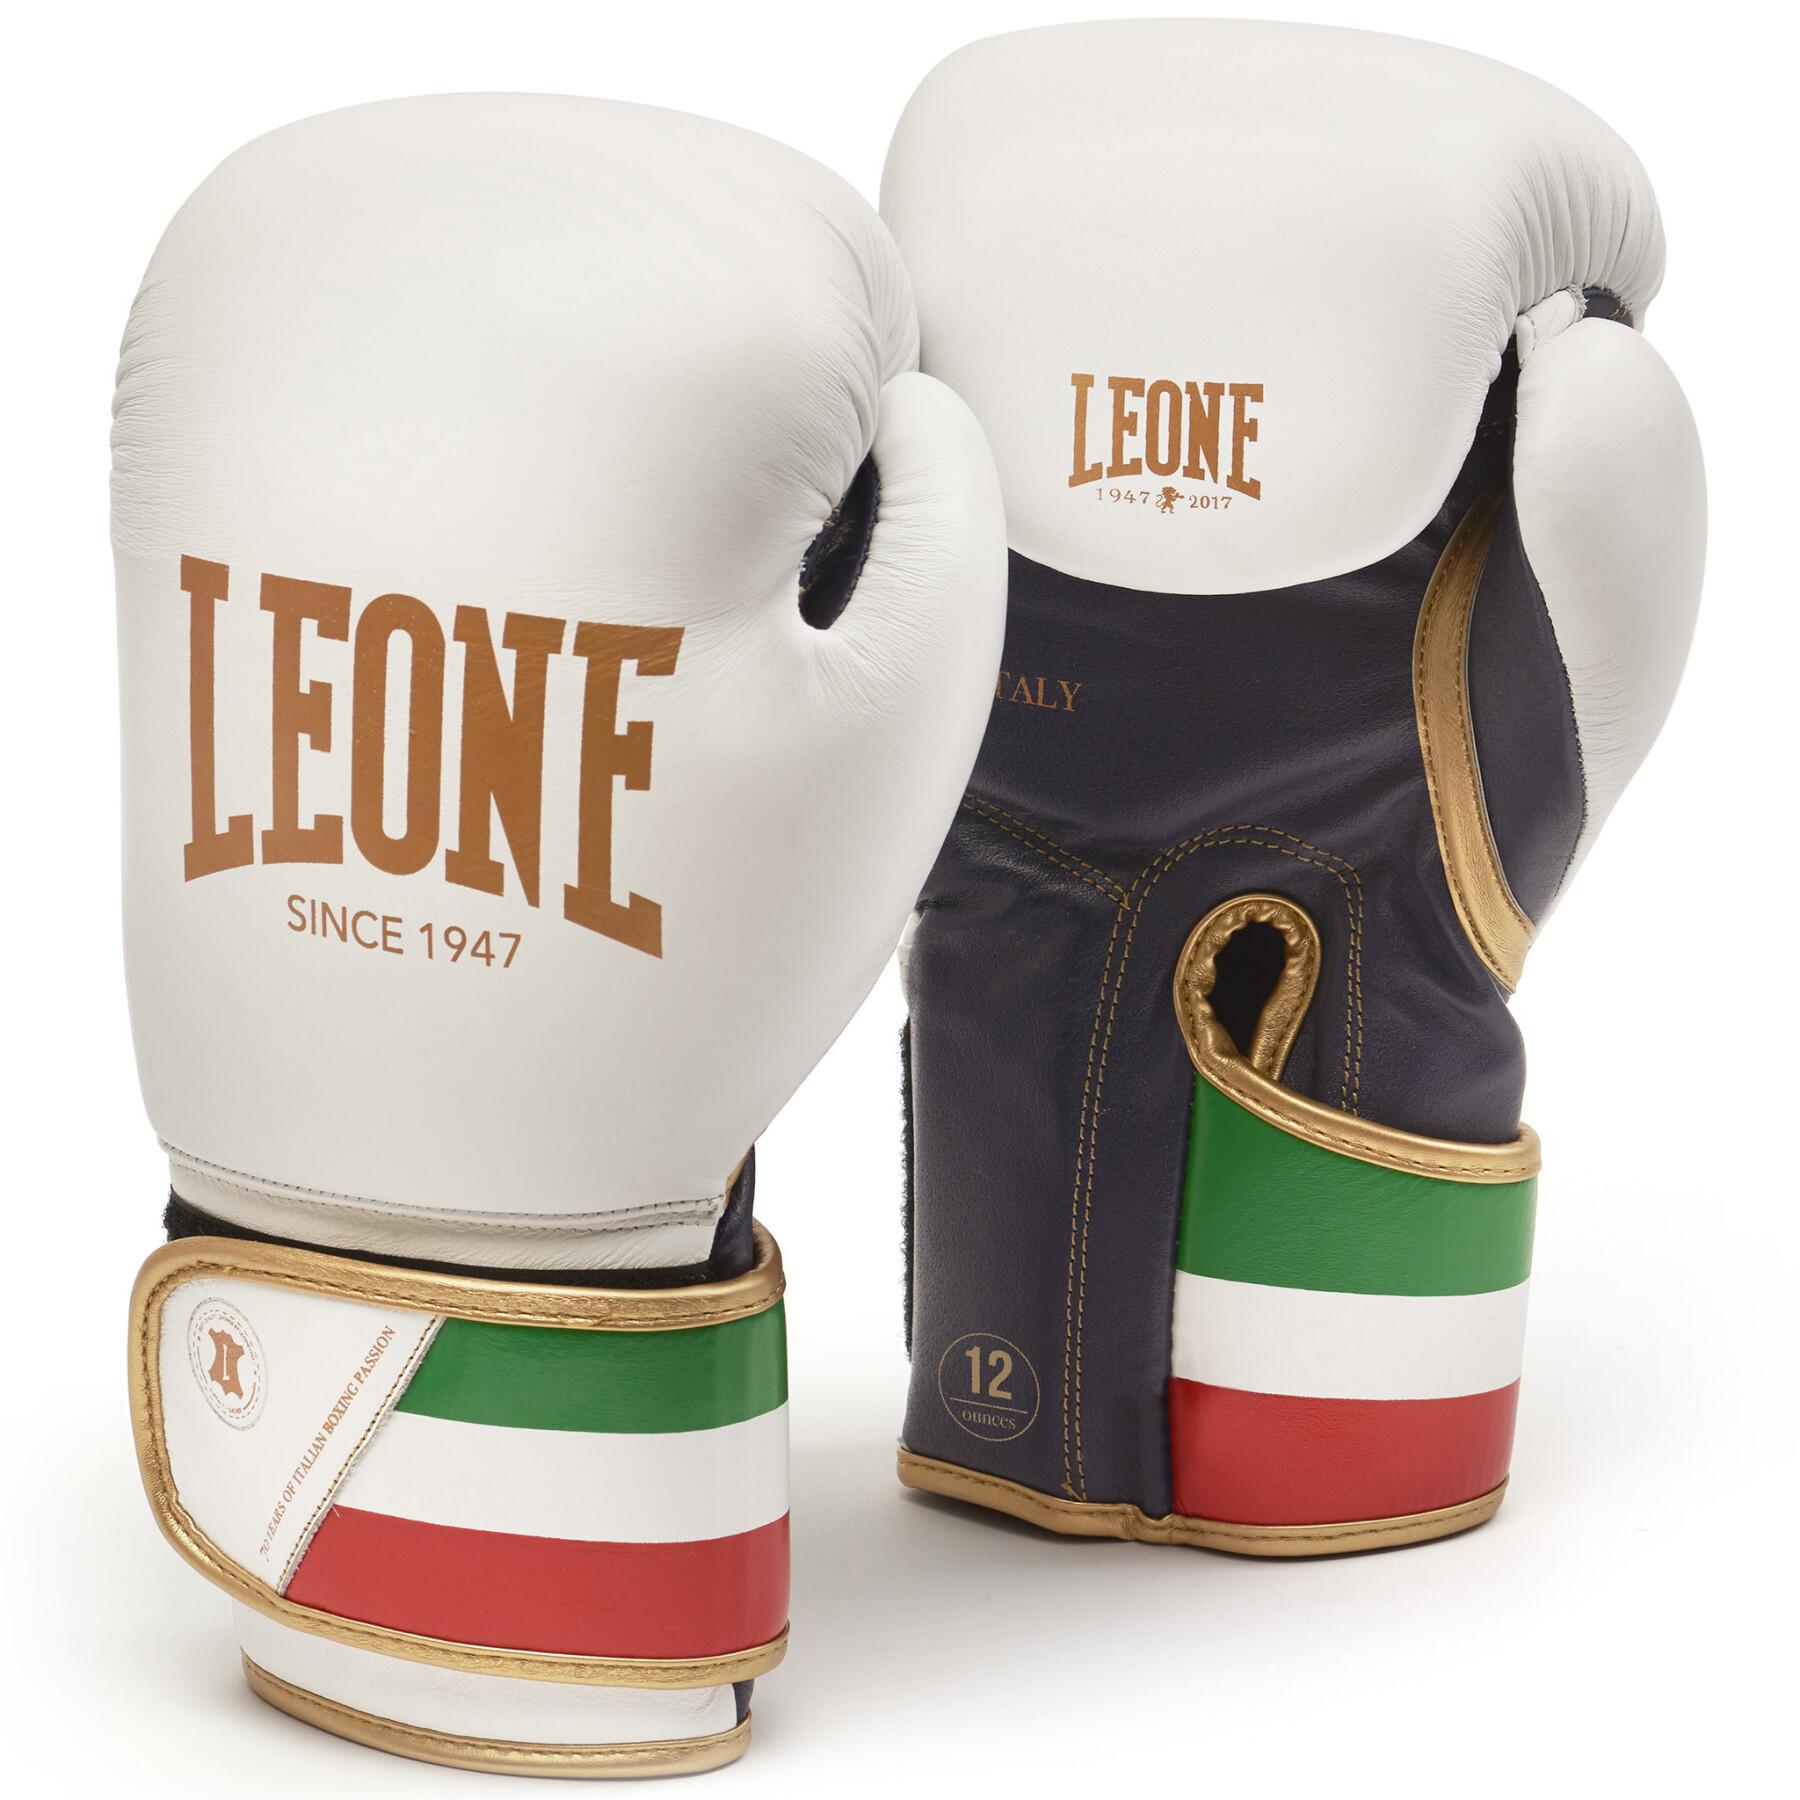 Luvas de boxe Leone Italy 12 oz